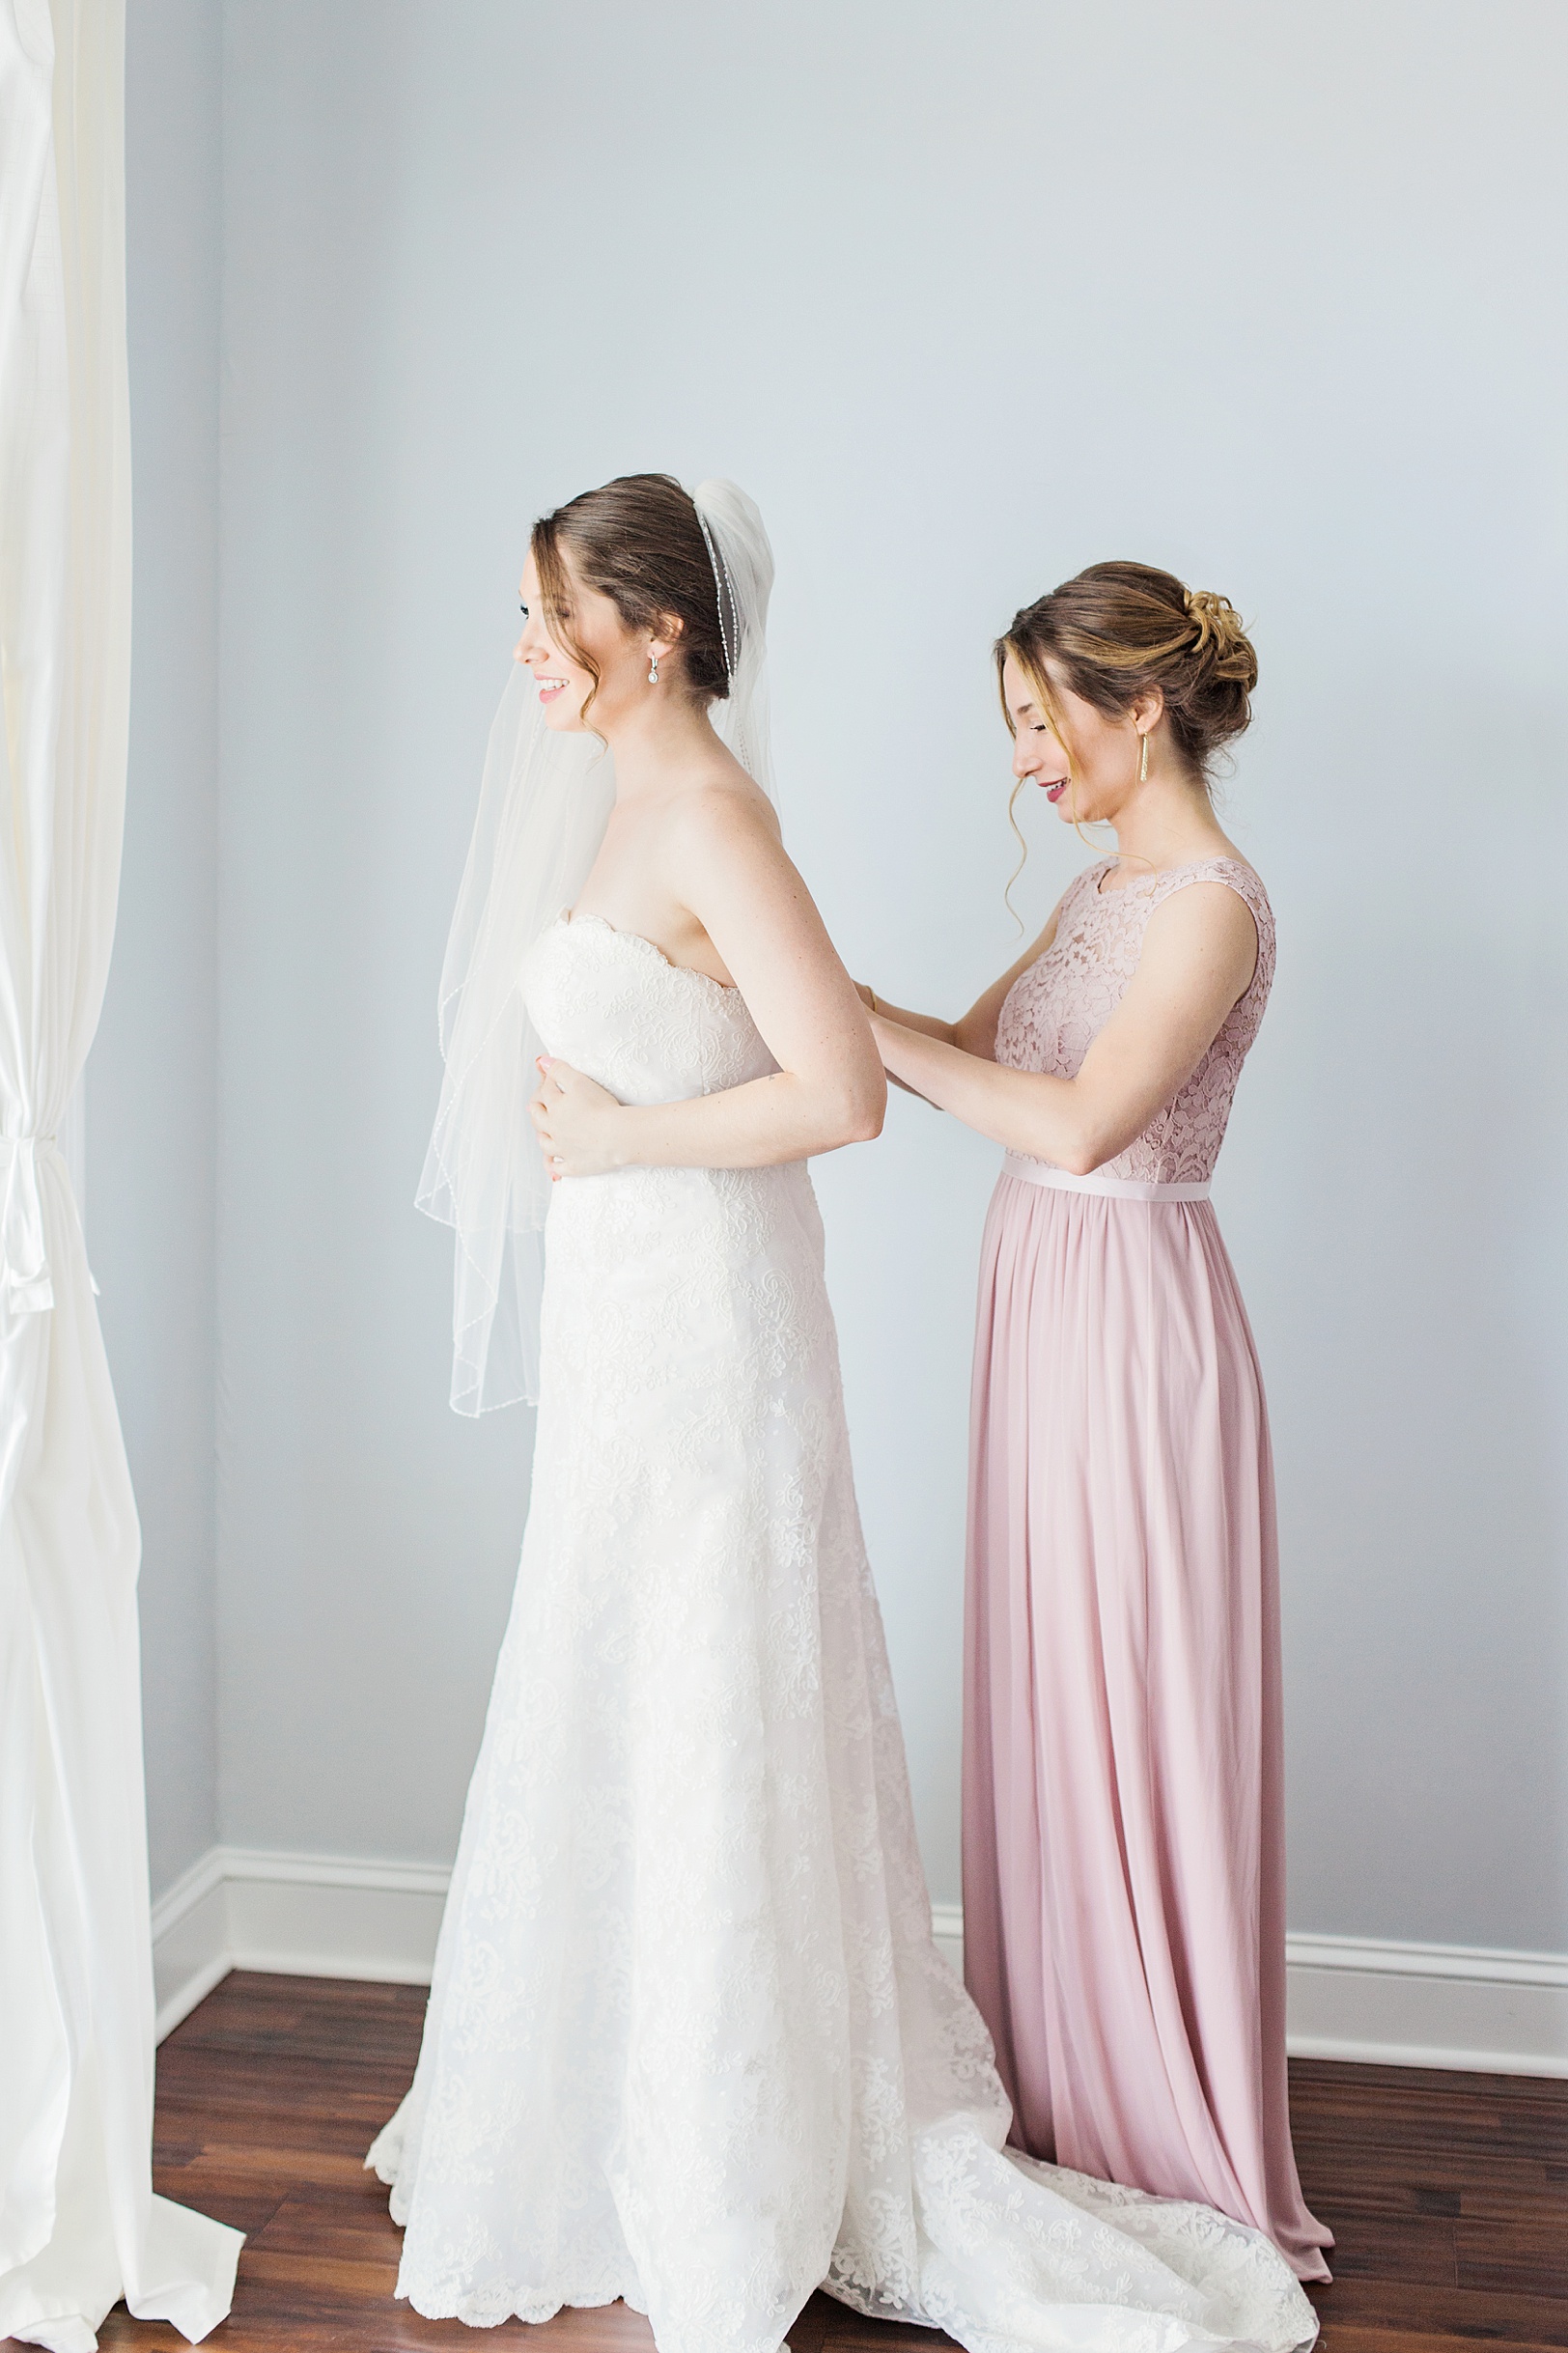 Sister helping Bride into Wedding Dress | Kaitlin Scott Photography